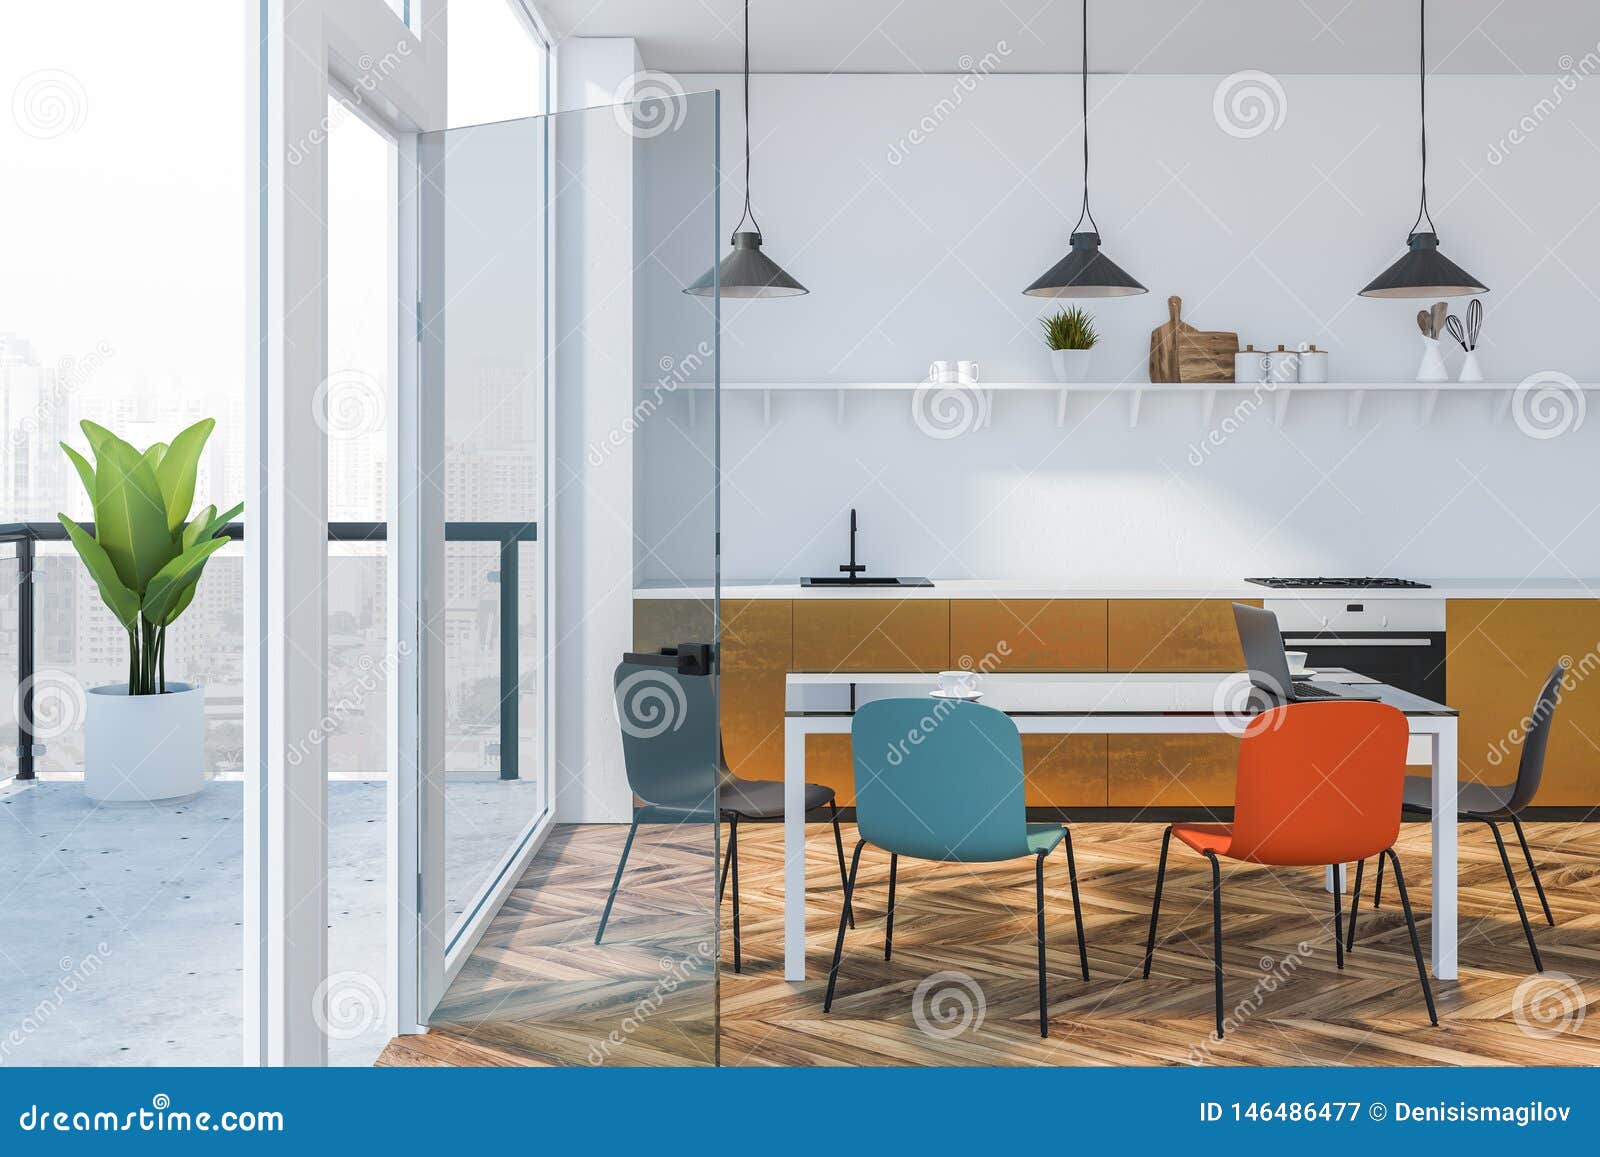 Bright Colored Kitchen Interior With Balcony Stock Illustration